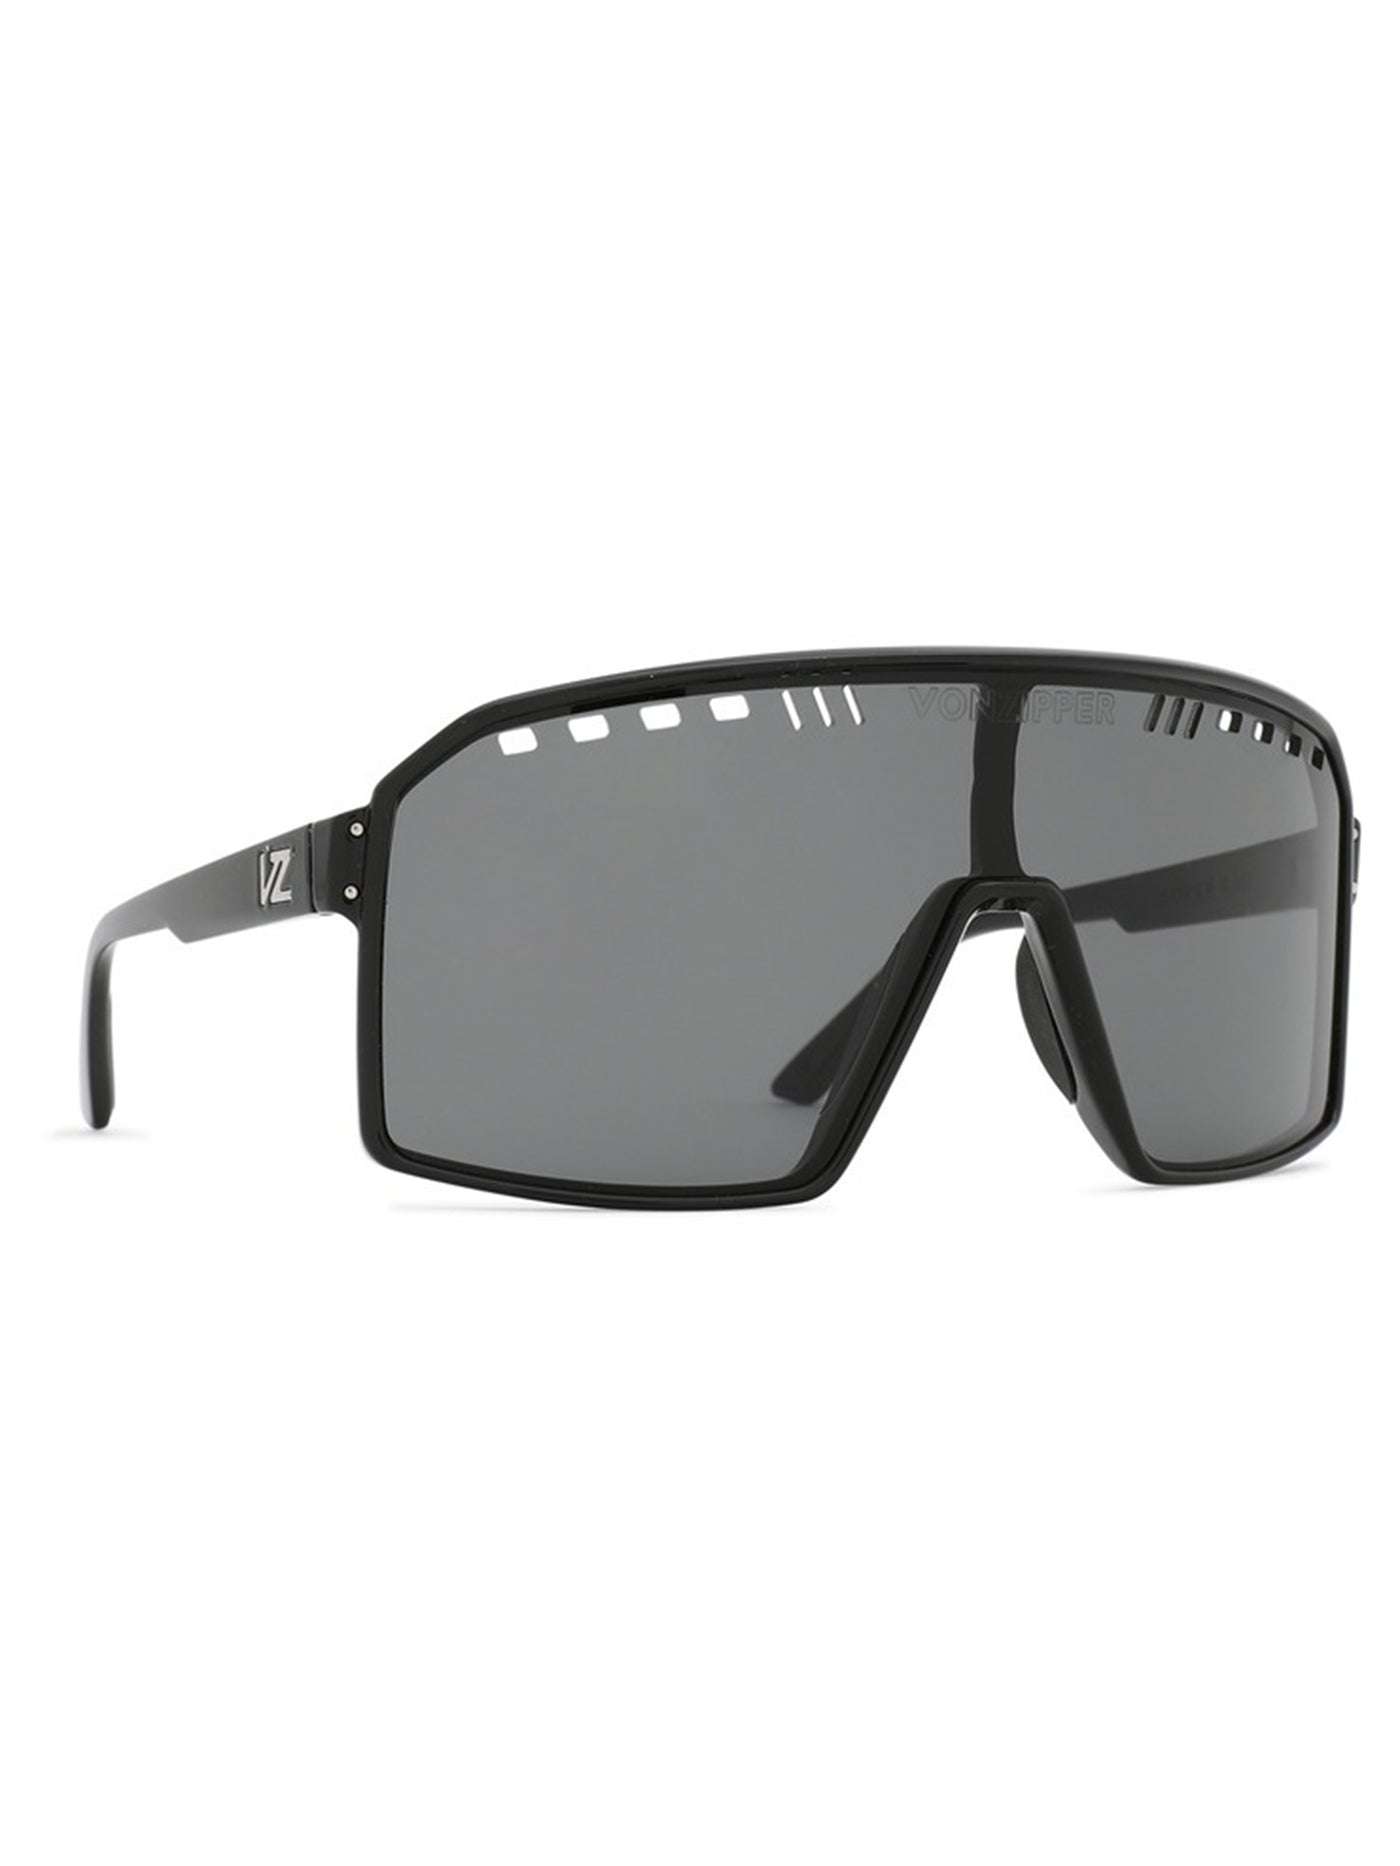 Von Zipper Super Rad Black Gloss/Vintage Grey Sunglasses